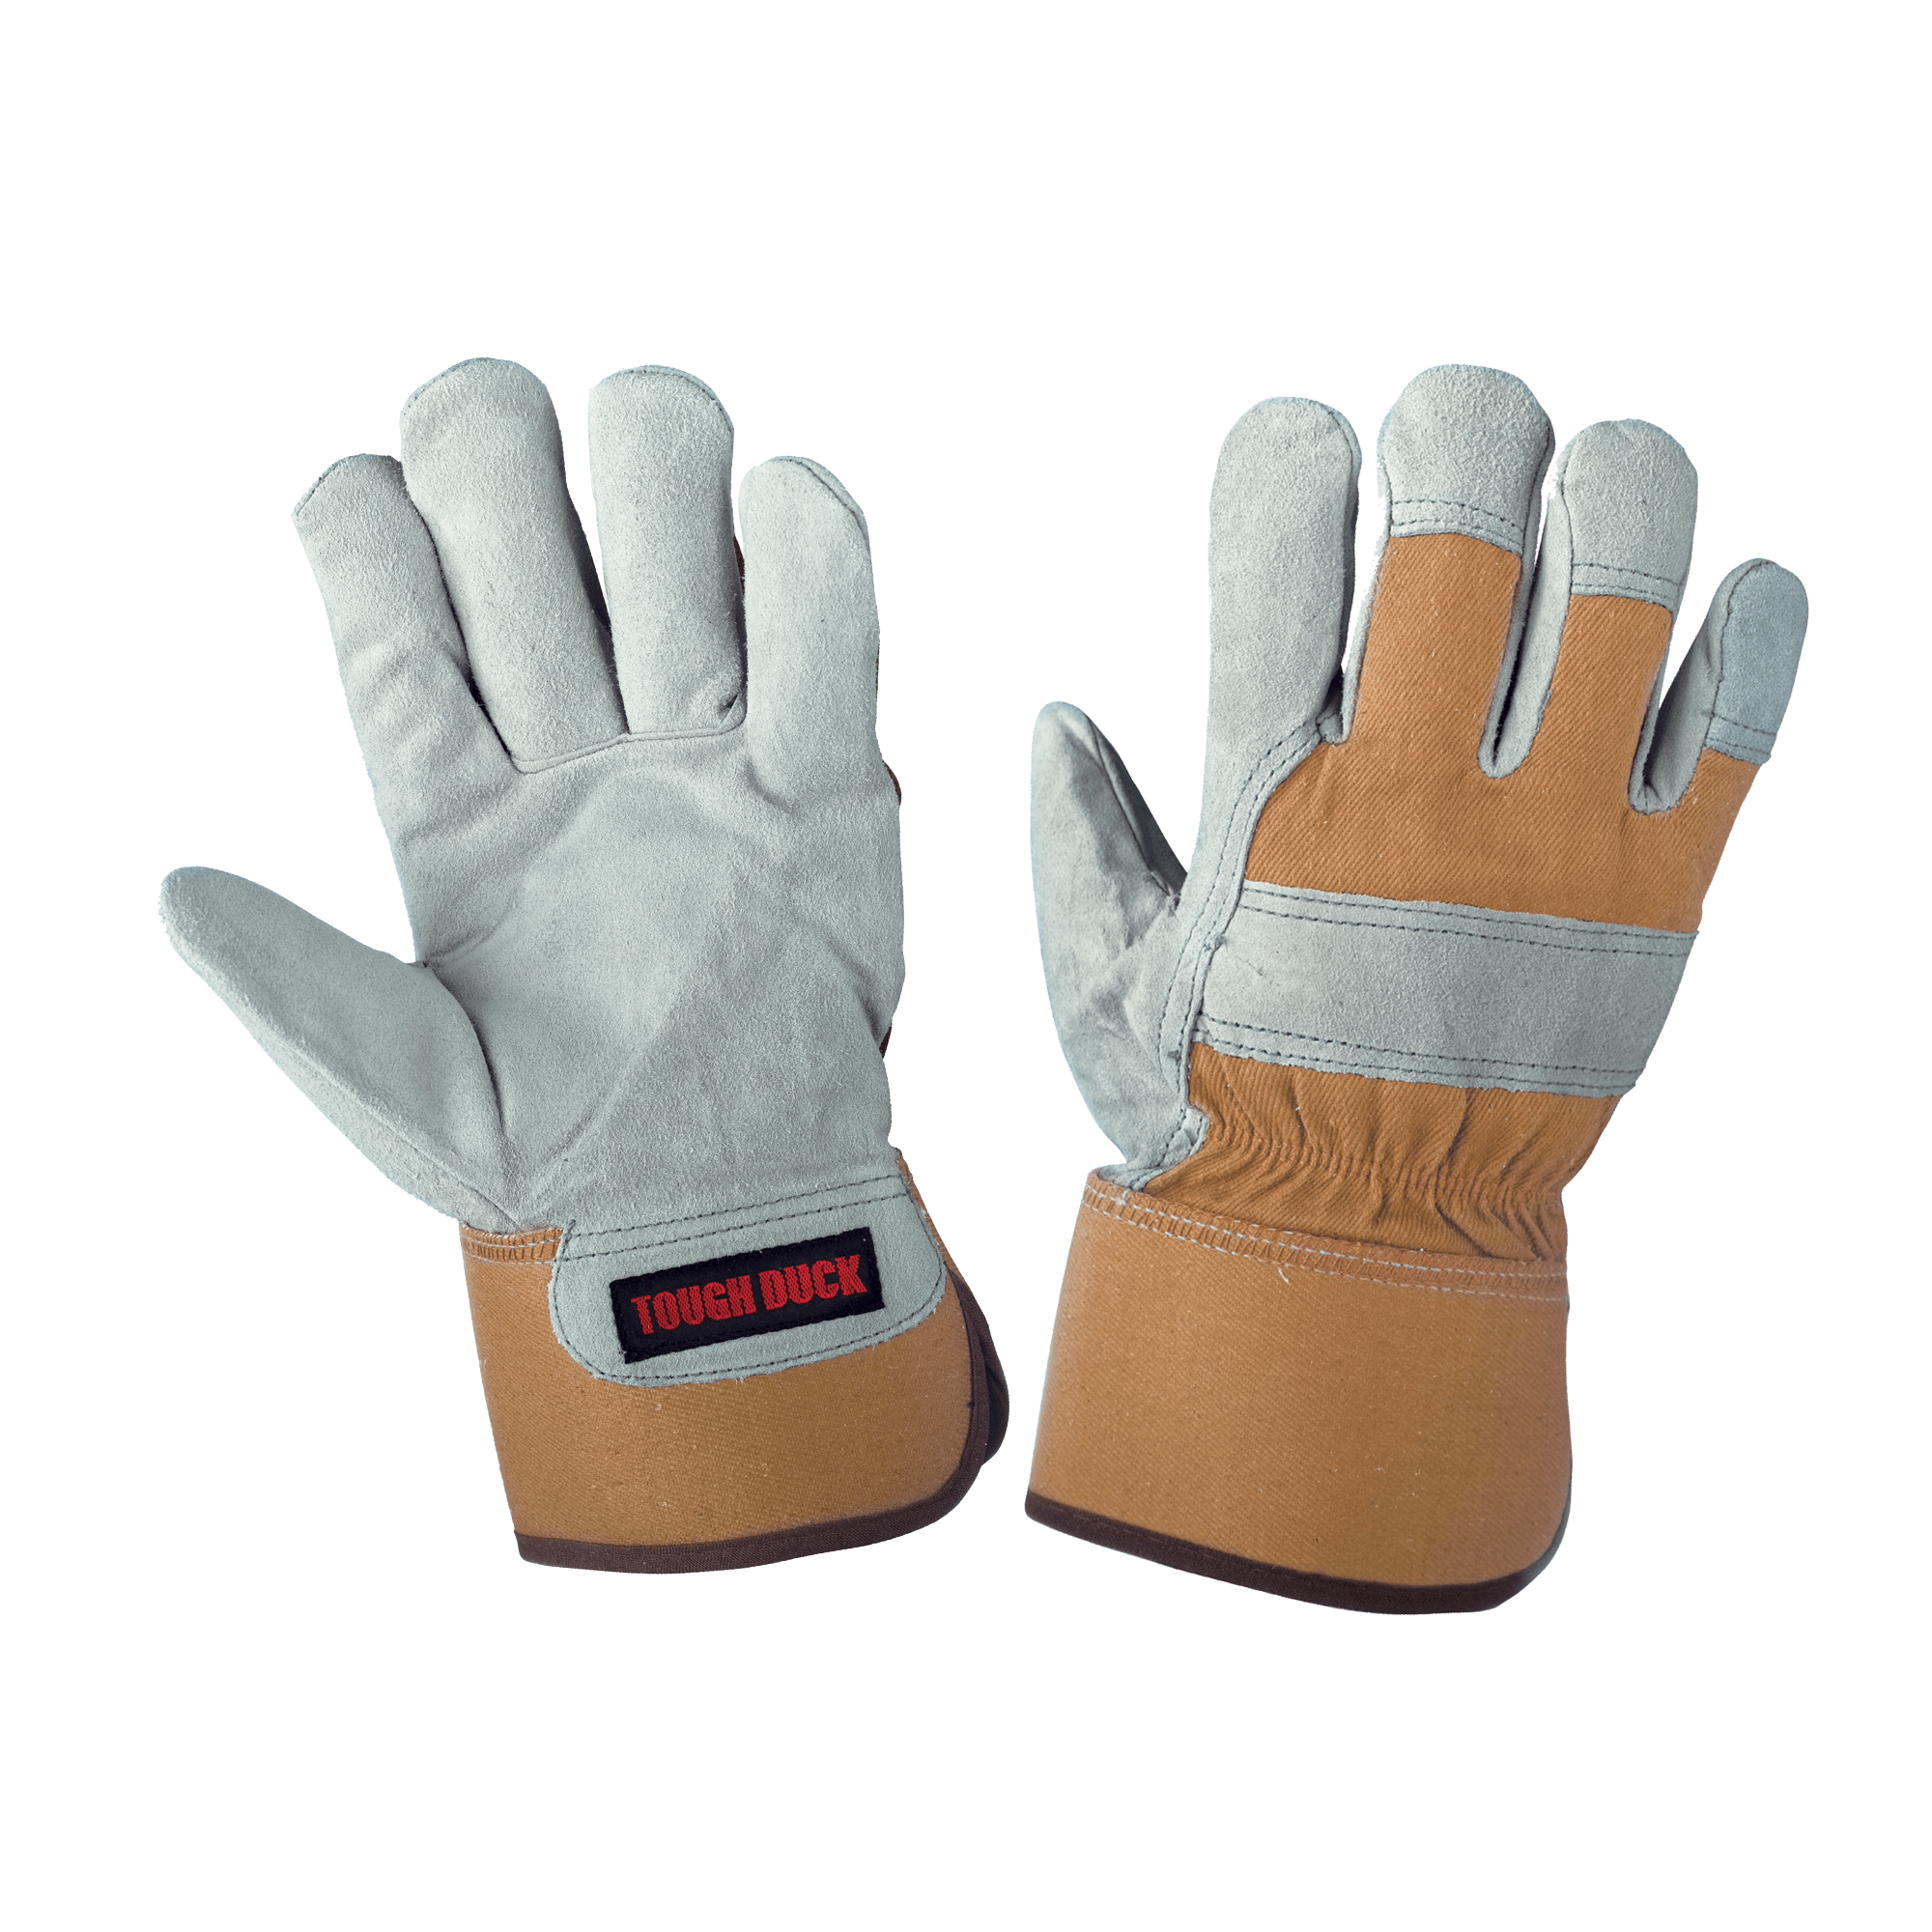 Tough Duck Premium Split Leather Work Gloves | M-2XL Work Gloves and Hats - Cleanflow